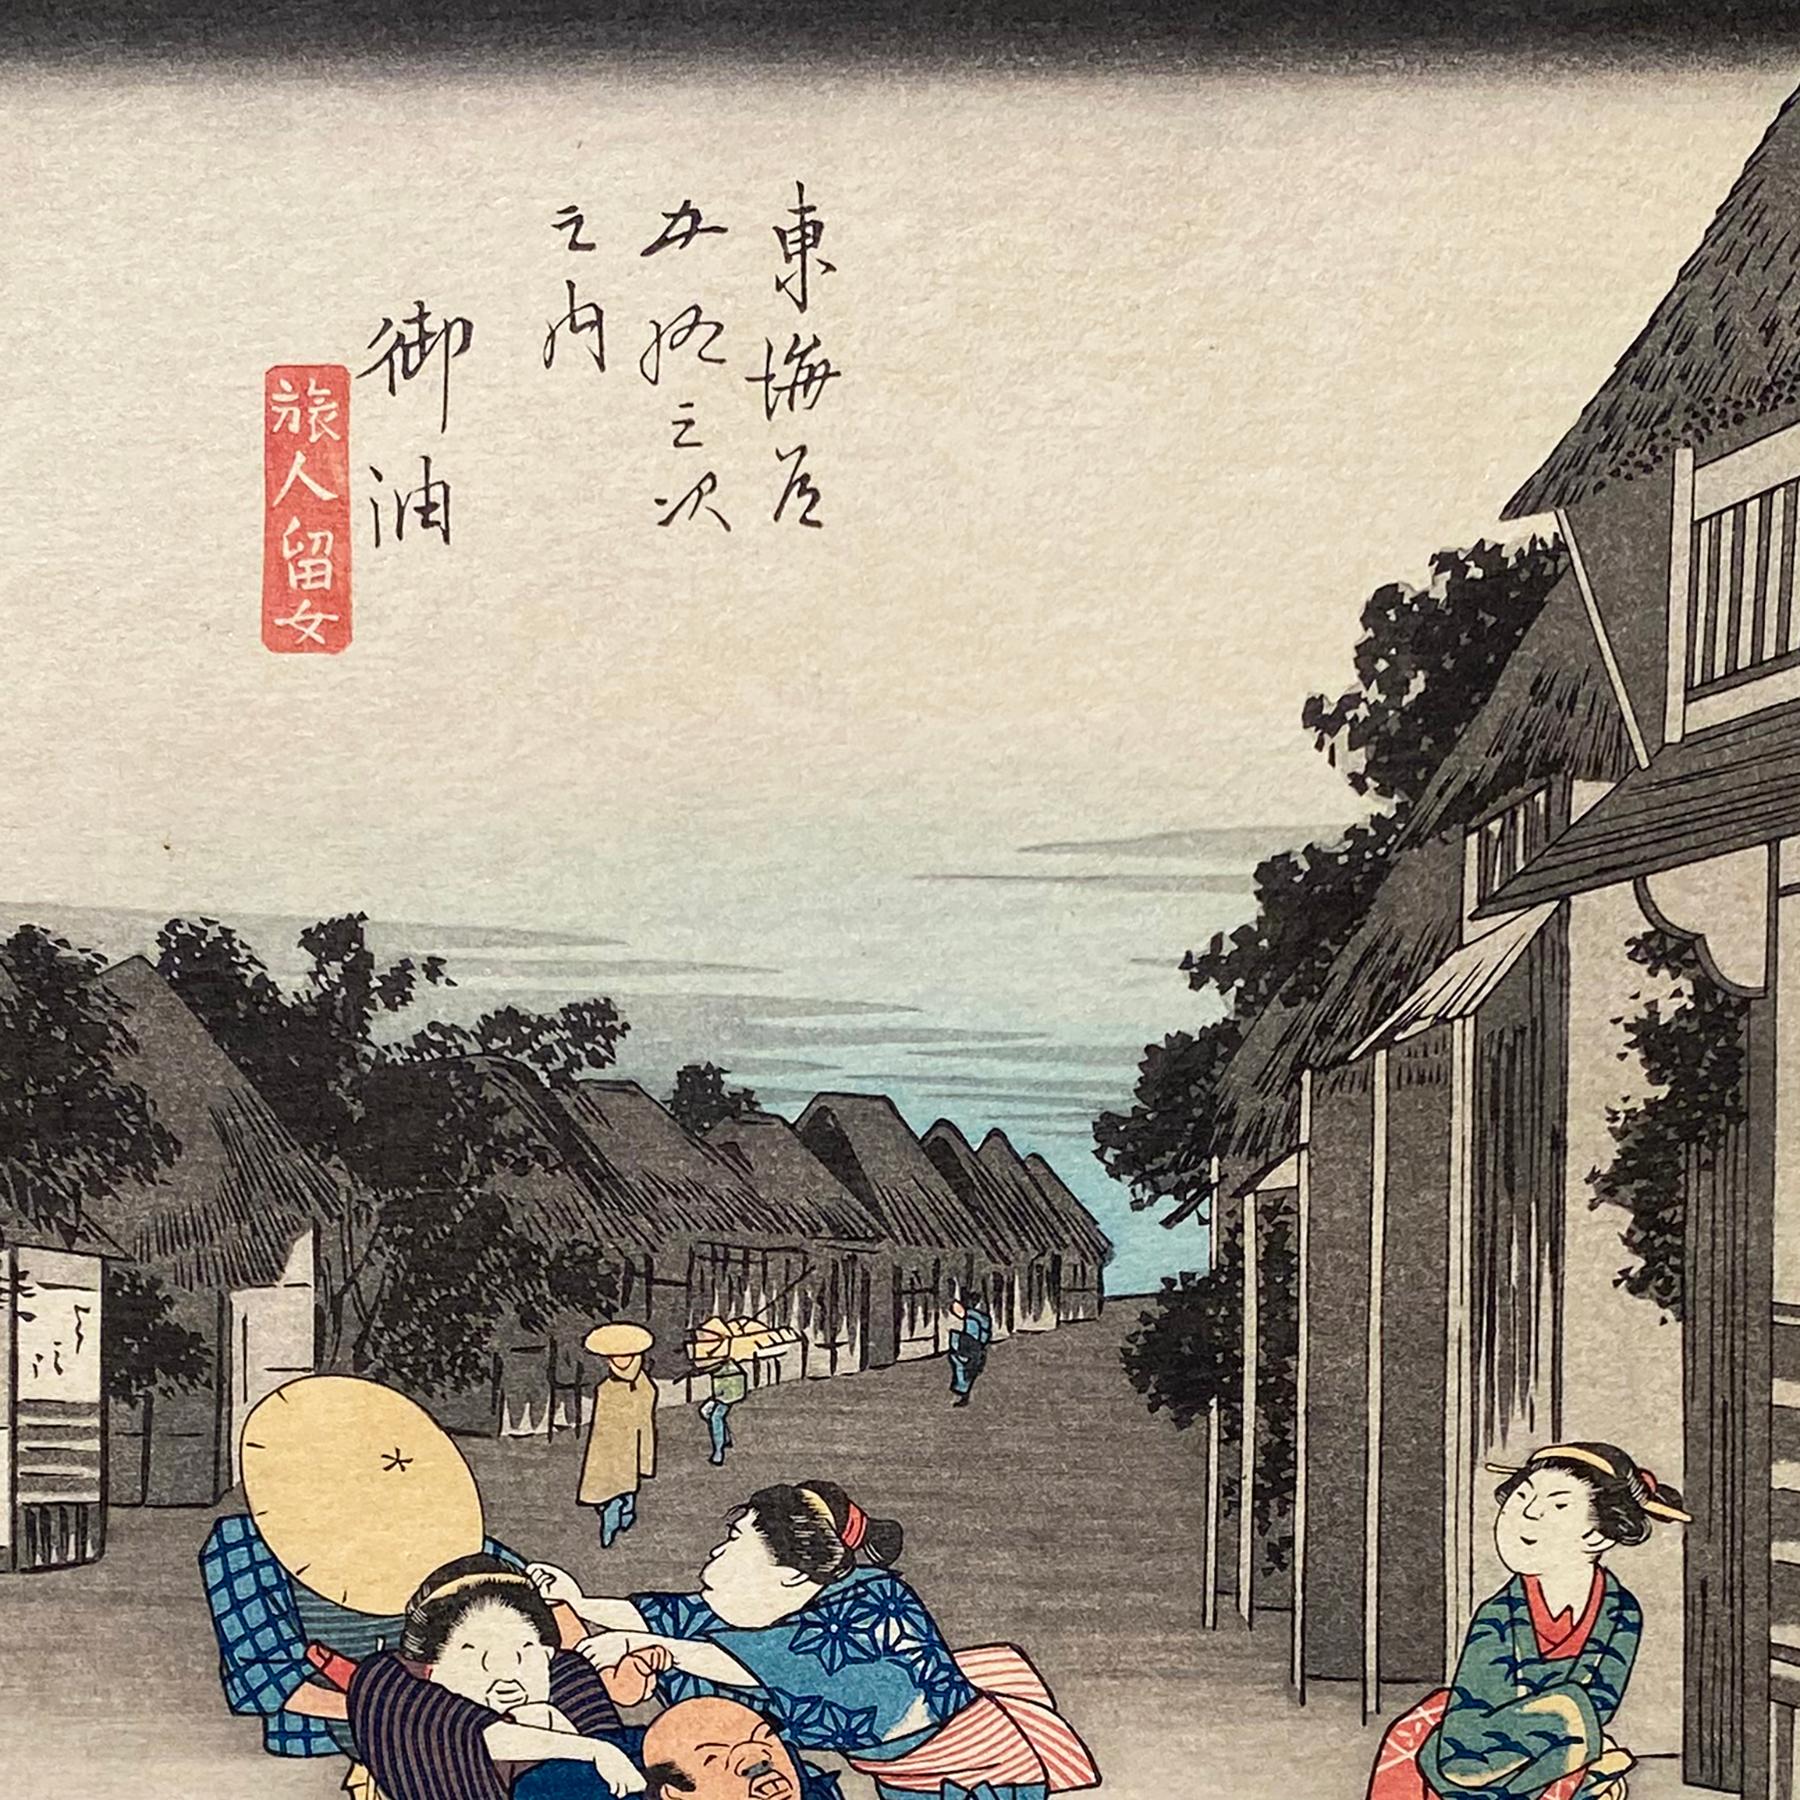 'View from Goyu', After Utagawa Hiroshige 歌川廣重, Ukiyo-e Woodblock, Tokaido For Sale 1